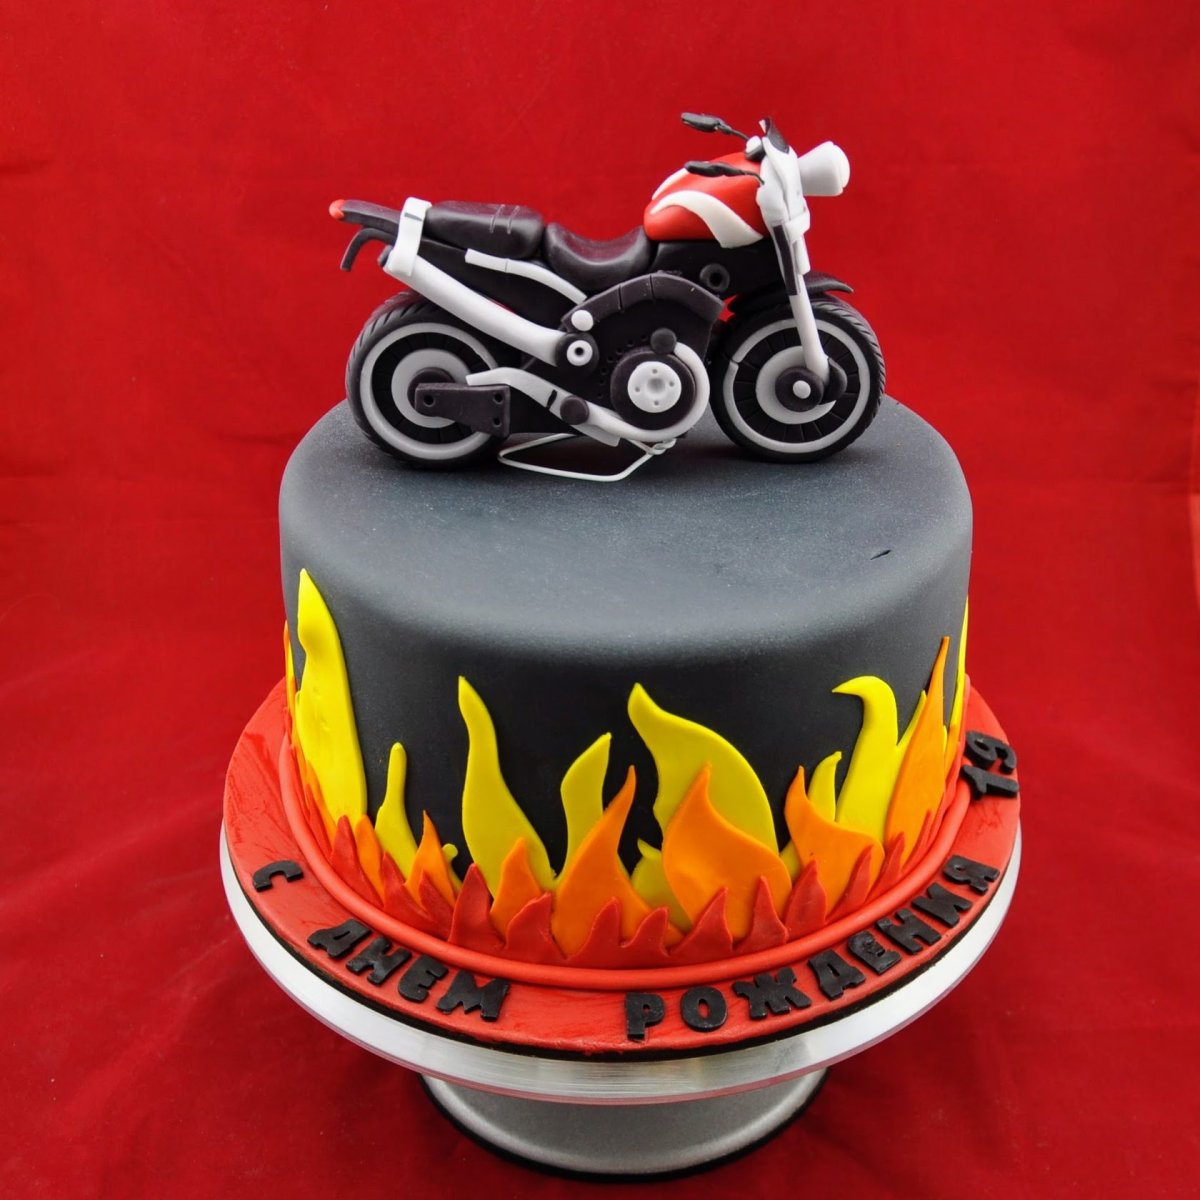 Торт с мотоциклом